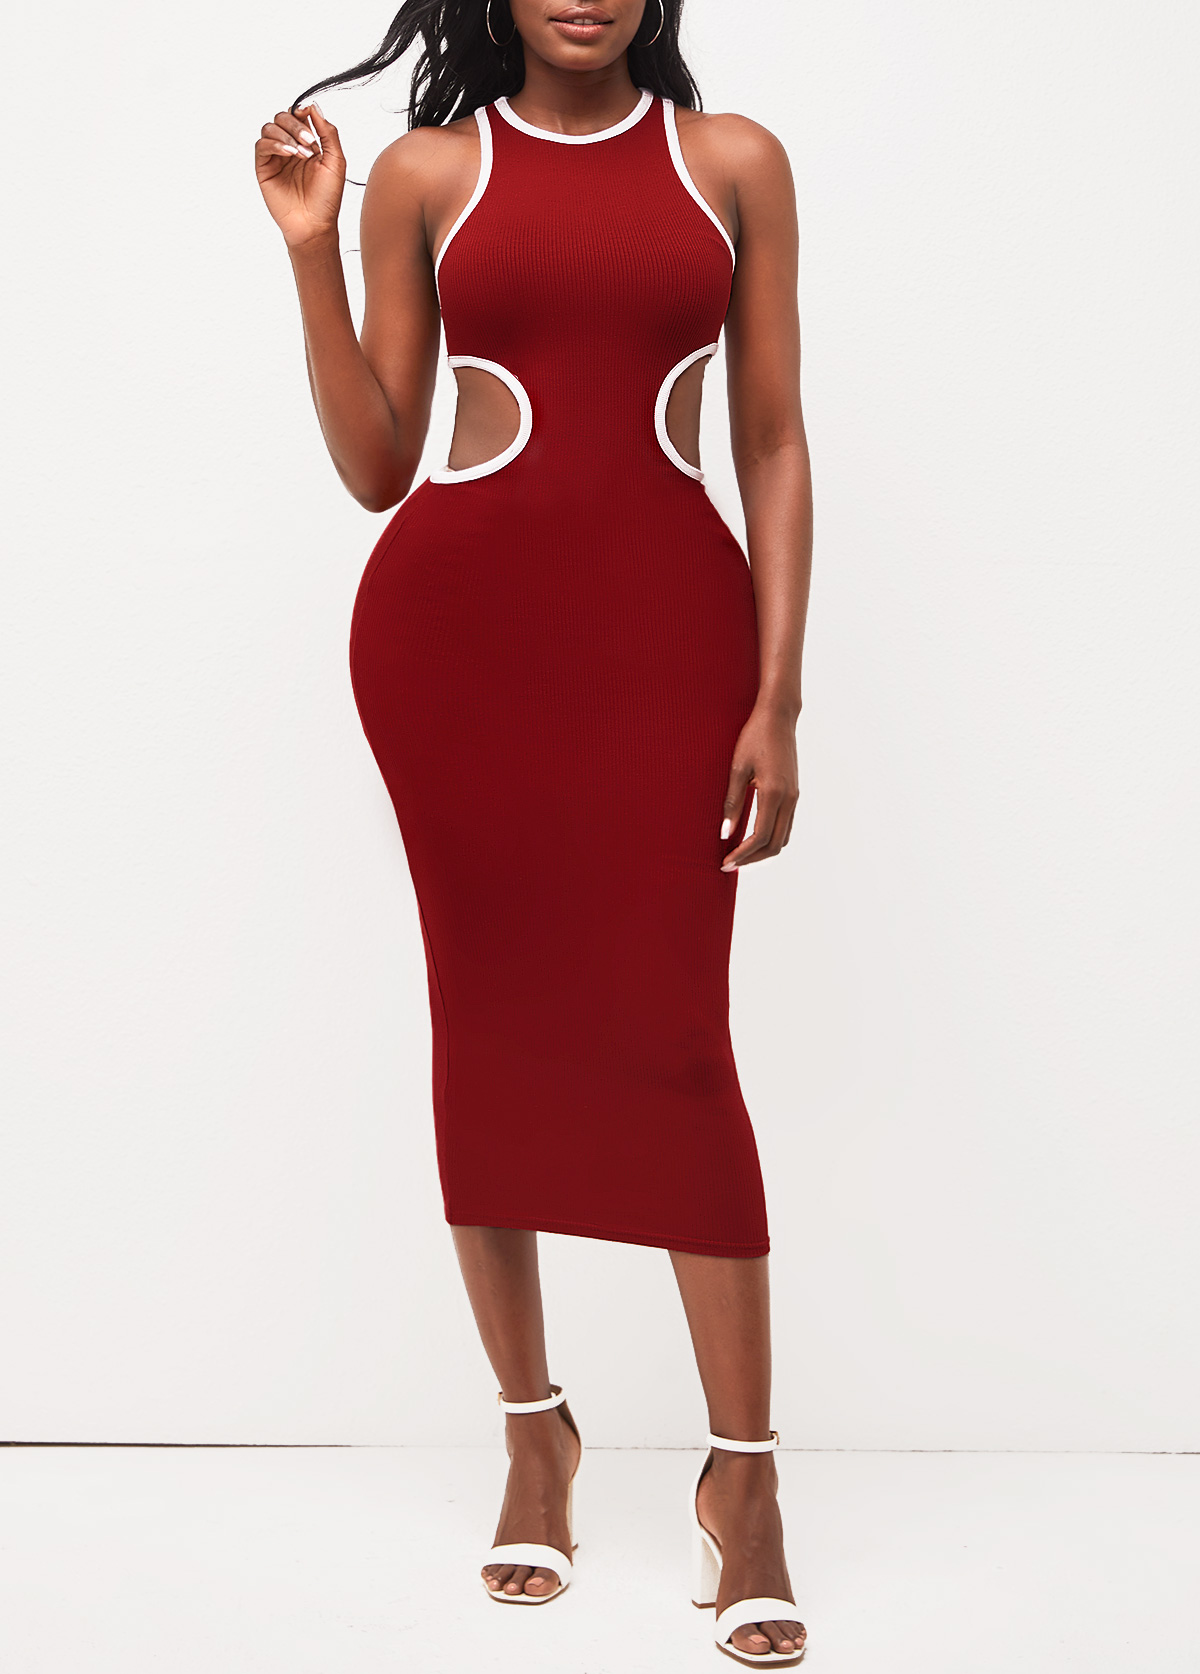 Cutout Round Neck Wine Red Sleeveless Dress